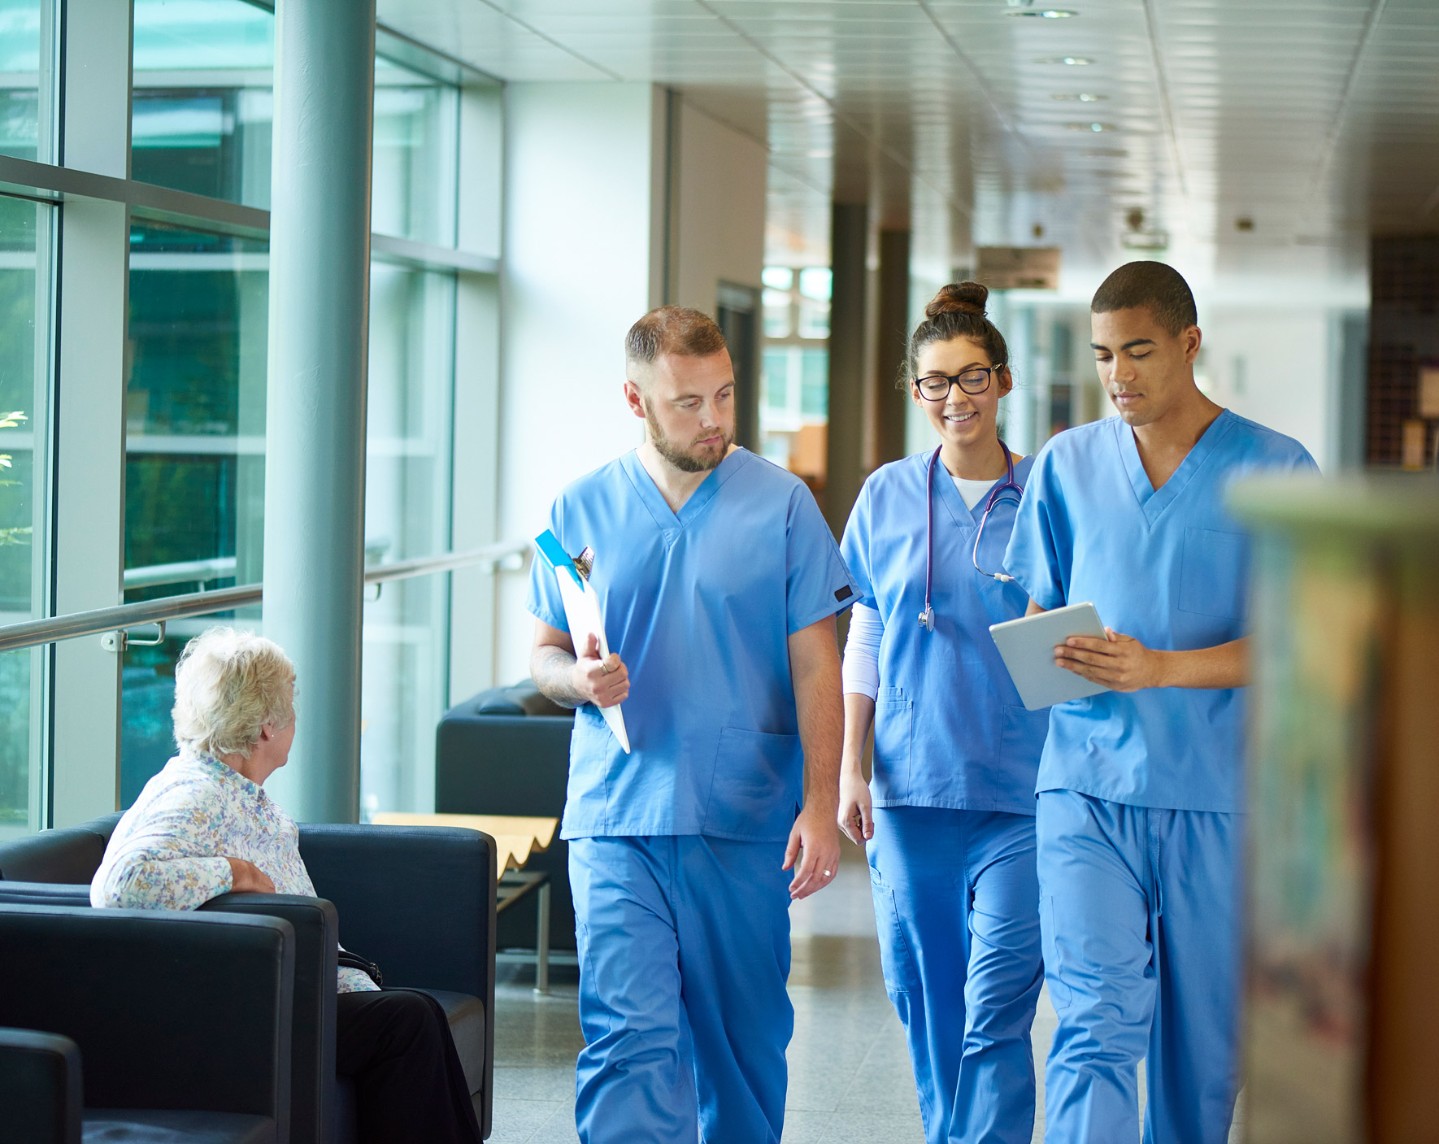 providers in scrubs walking down hallway and talking